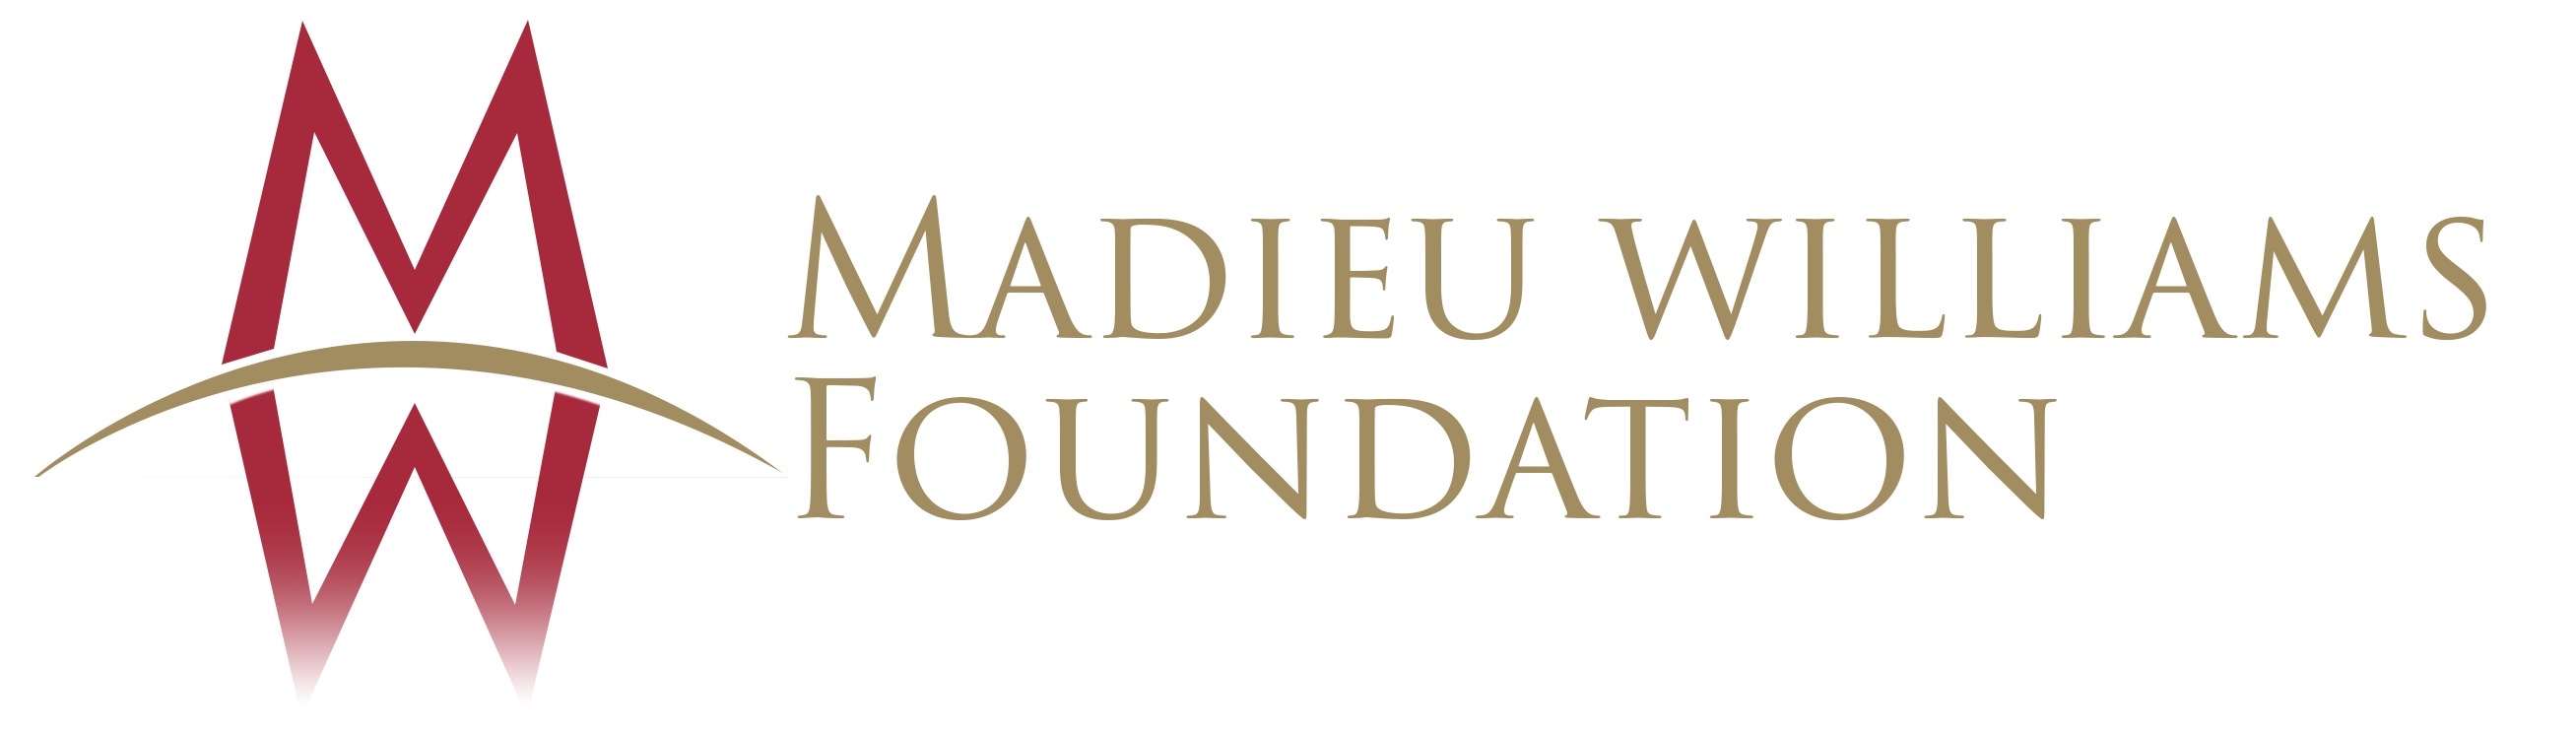 Madieu Williams Foundation